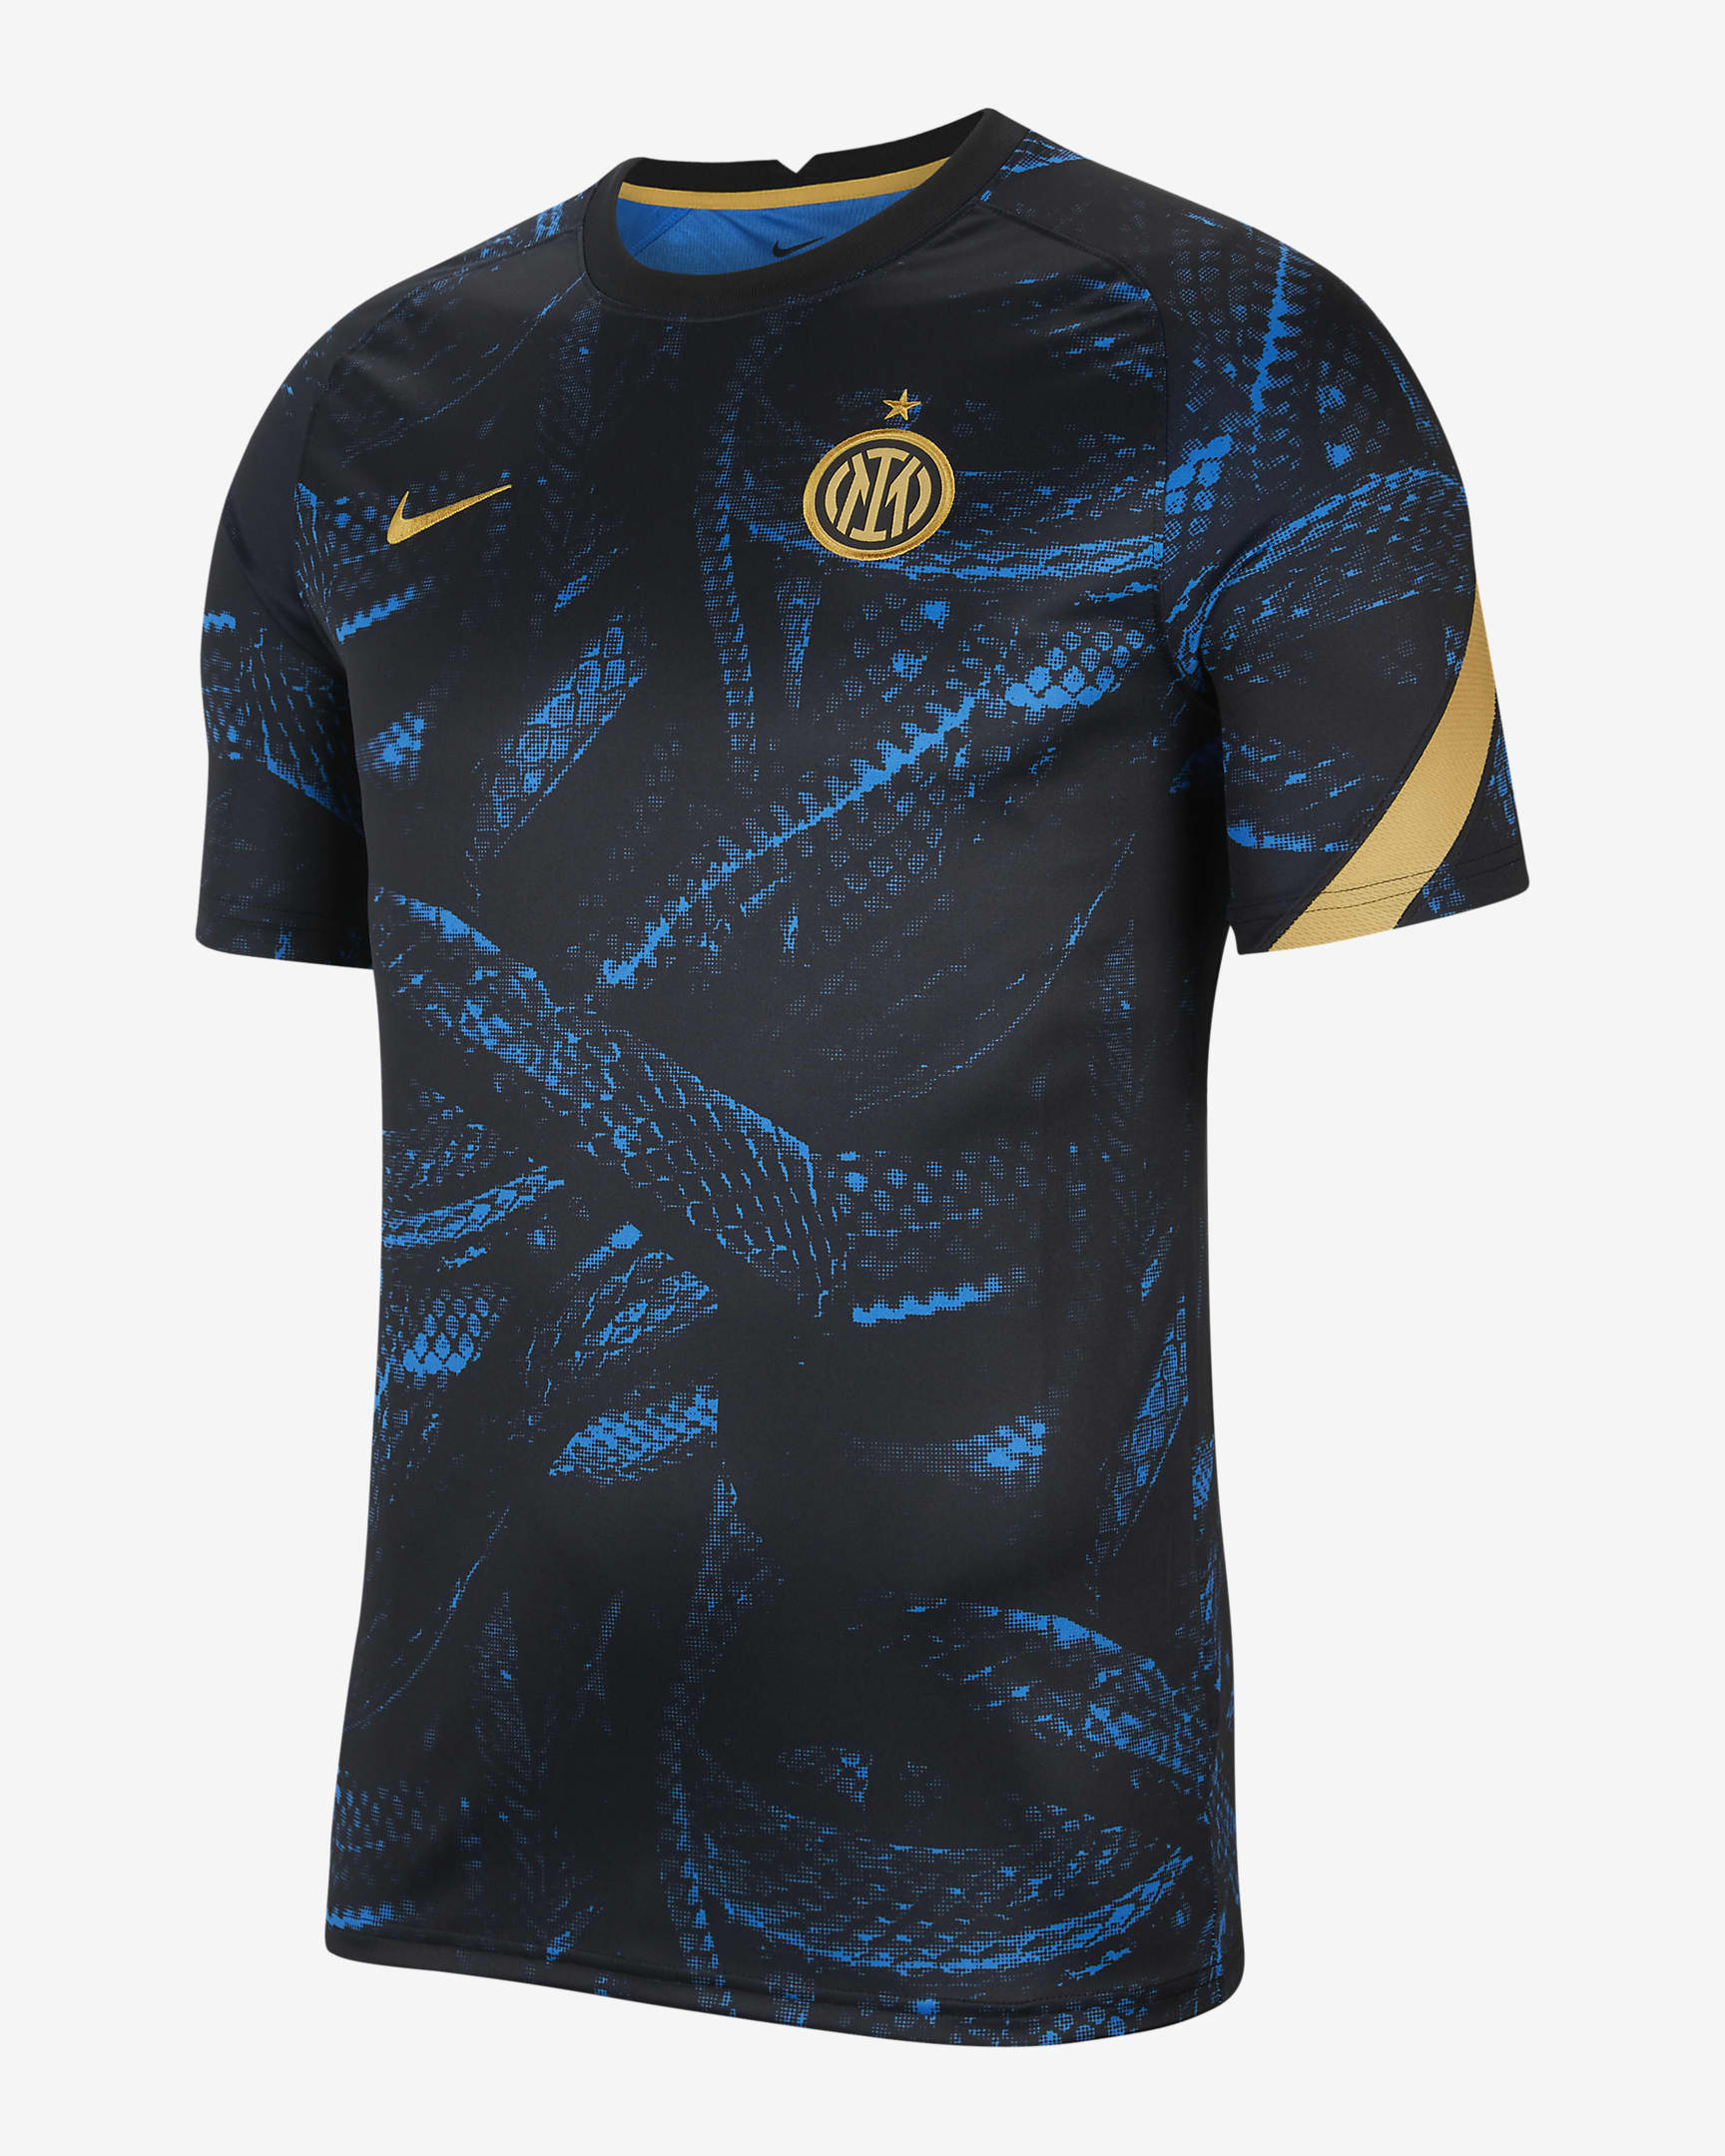 Inter Milan 21 22 Pre Match Shirt Released